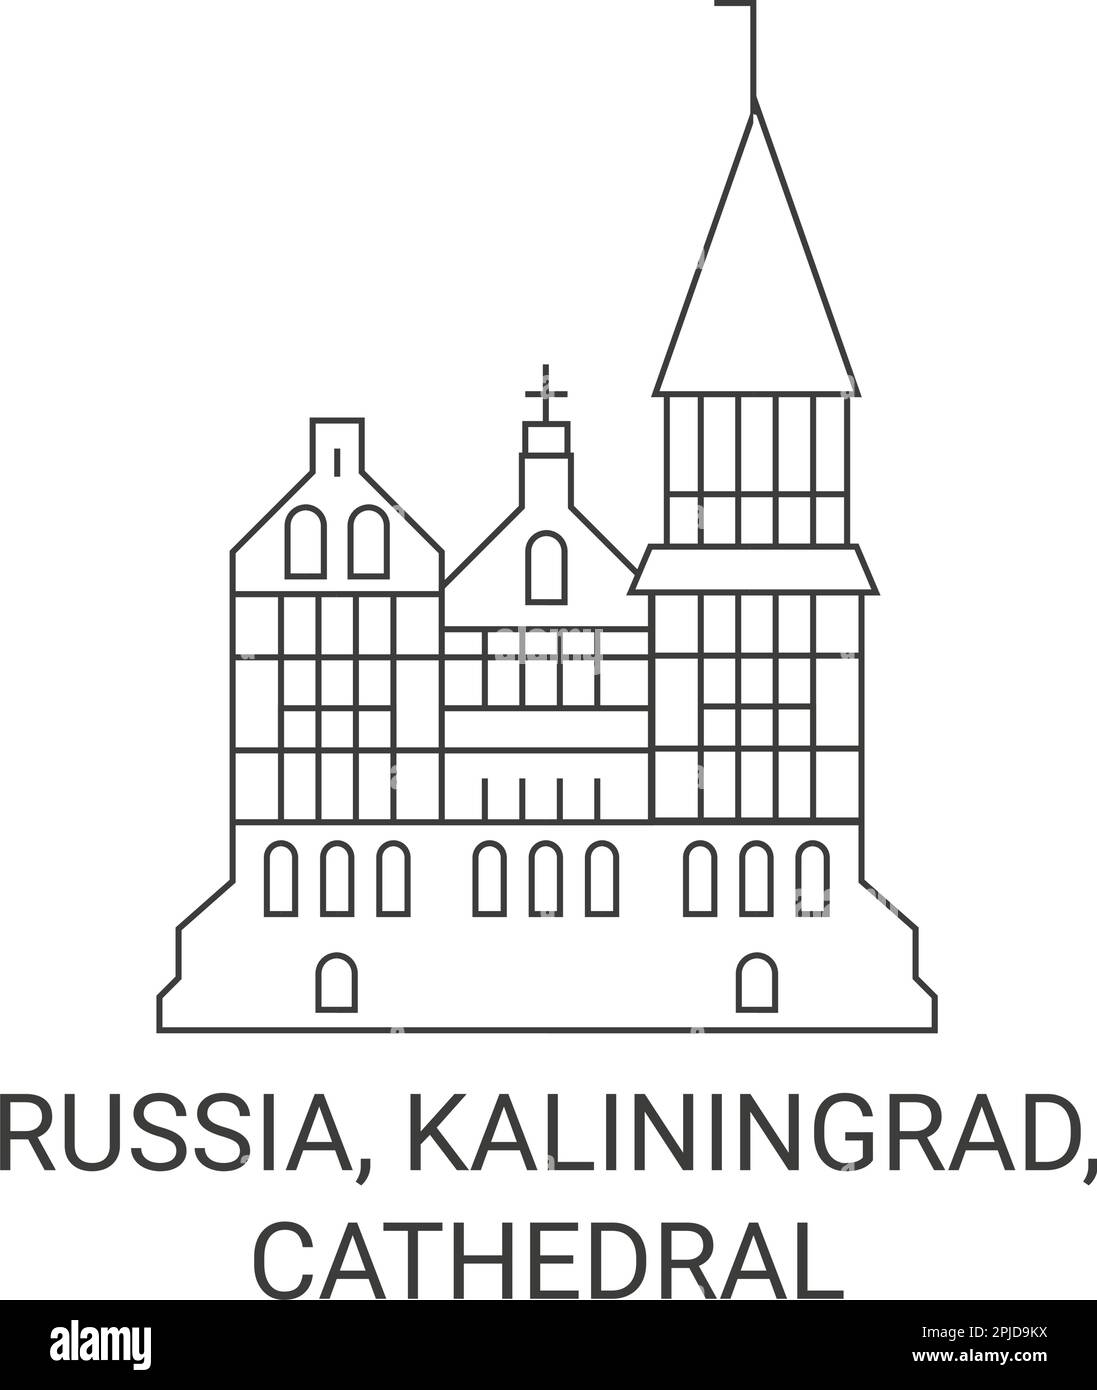 Russie, Kaliningrad, Cathedral Travel illustration vectorielle Illustration de Vecteur